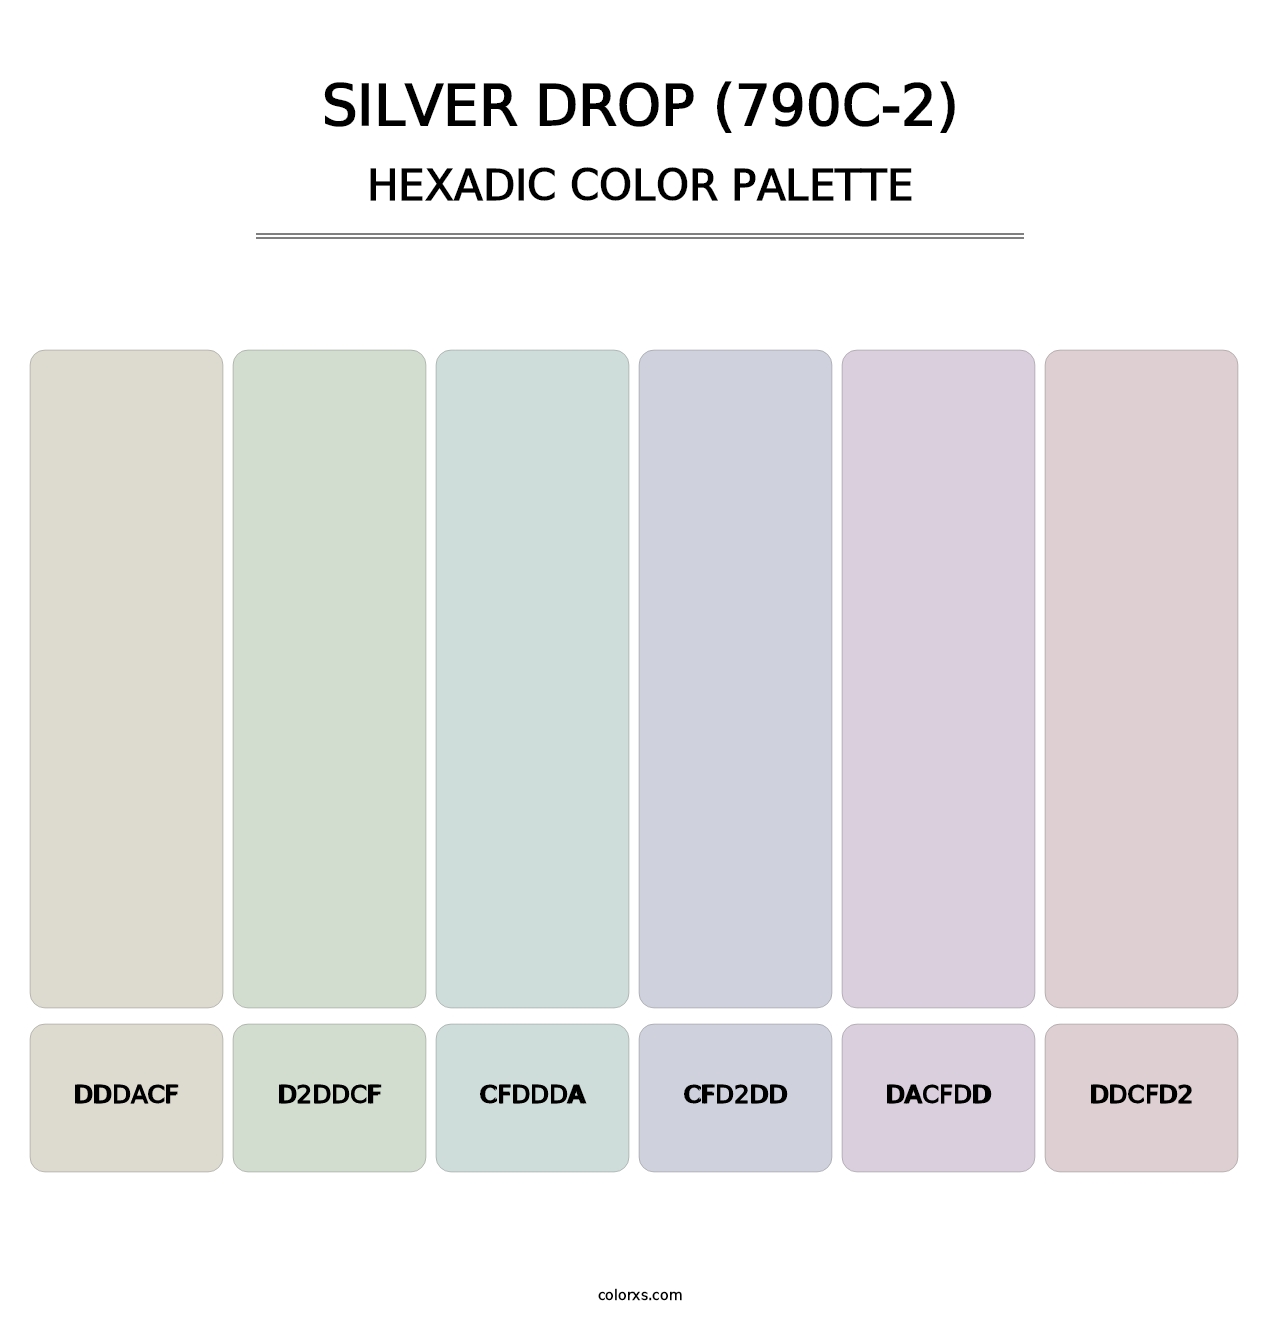 Silver Drop (790C-2) - Hexadic Color Palette